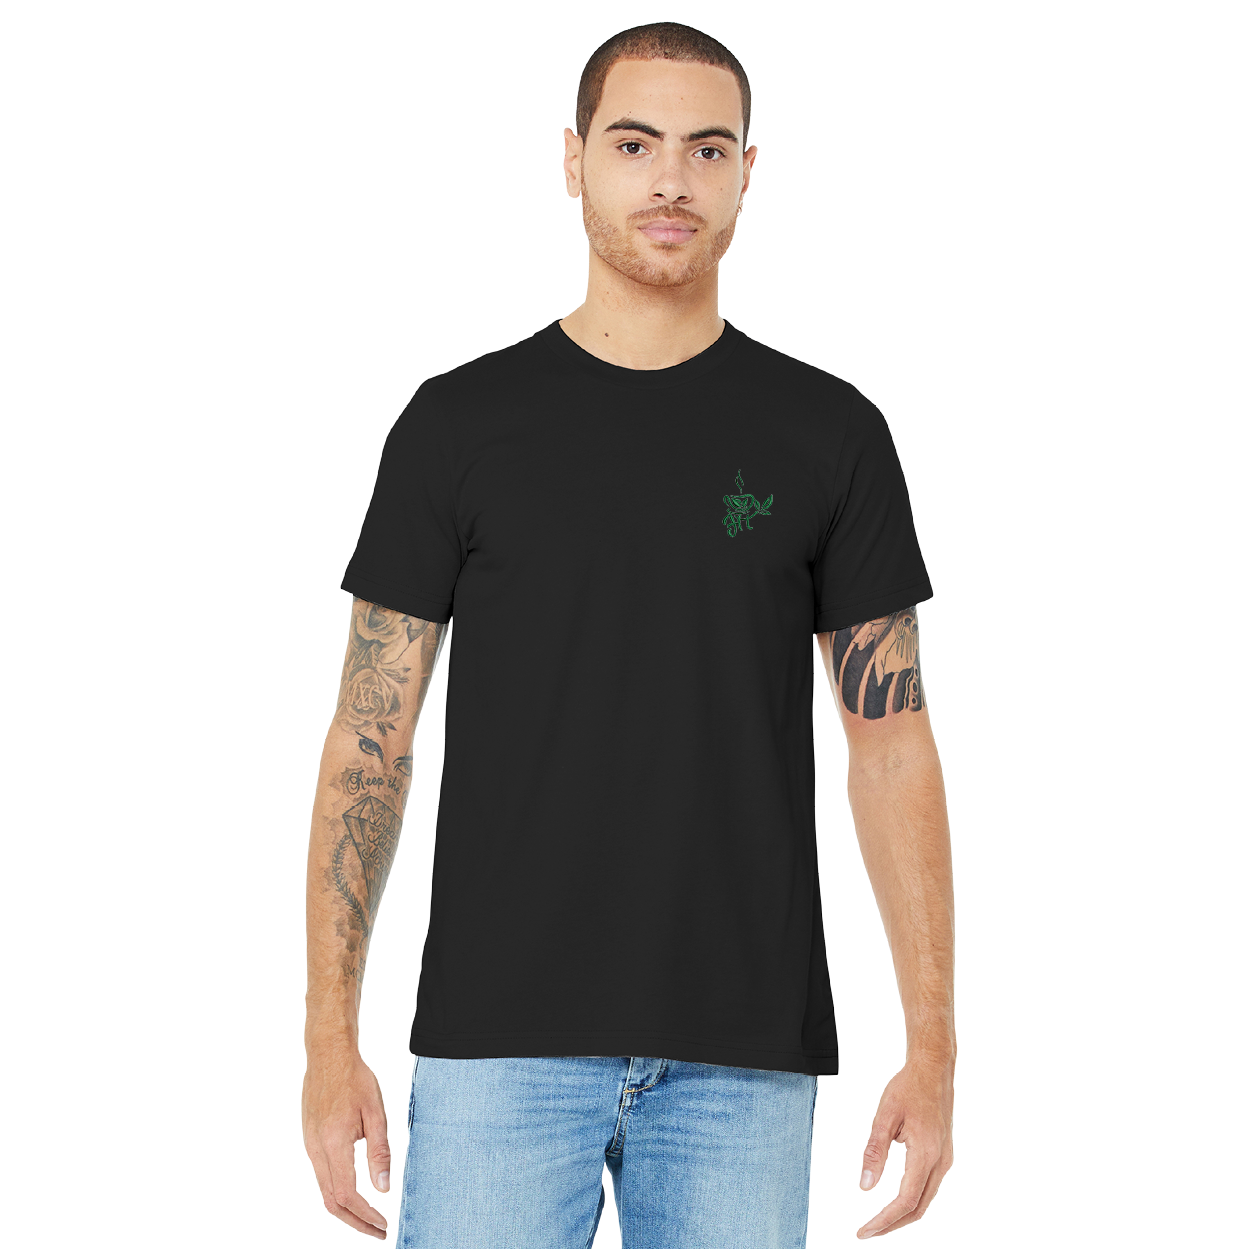 JHerbalTeas Black T-Shirt